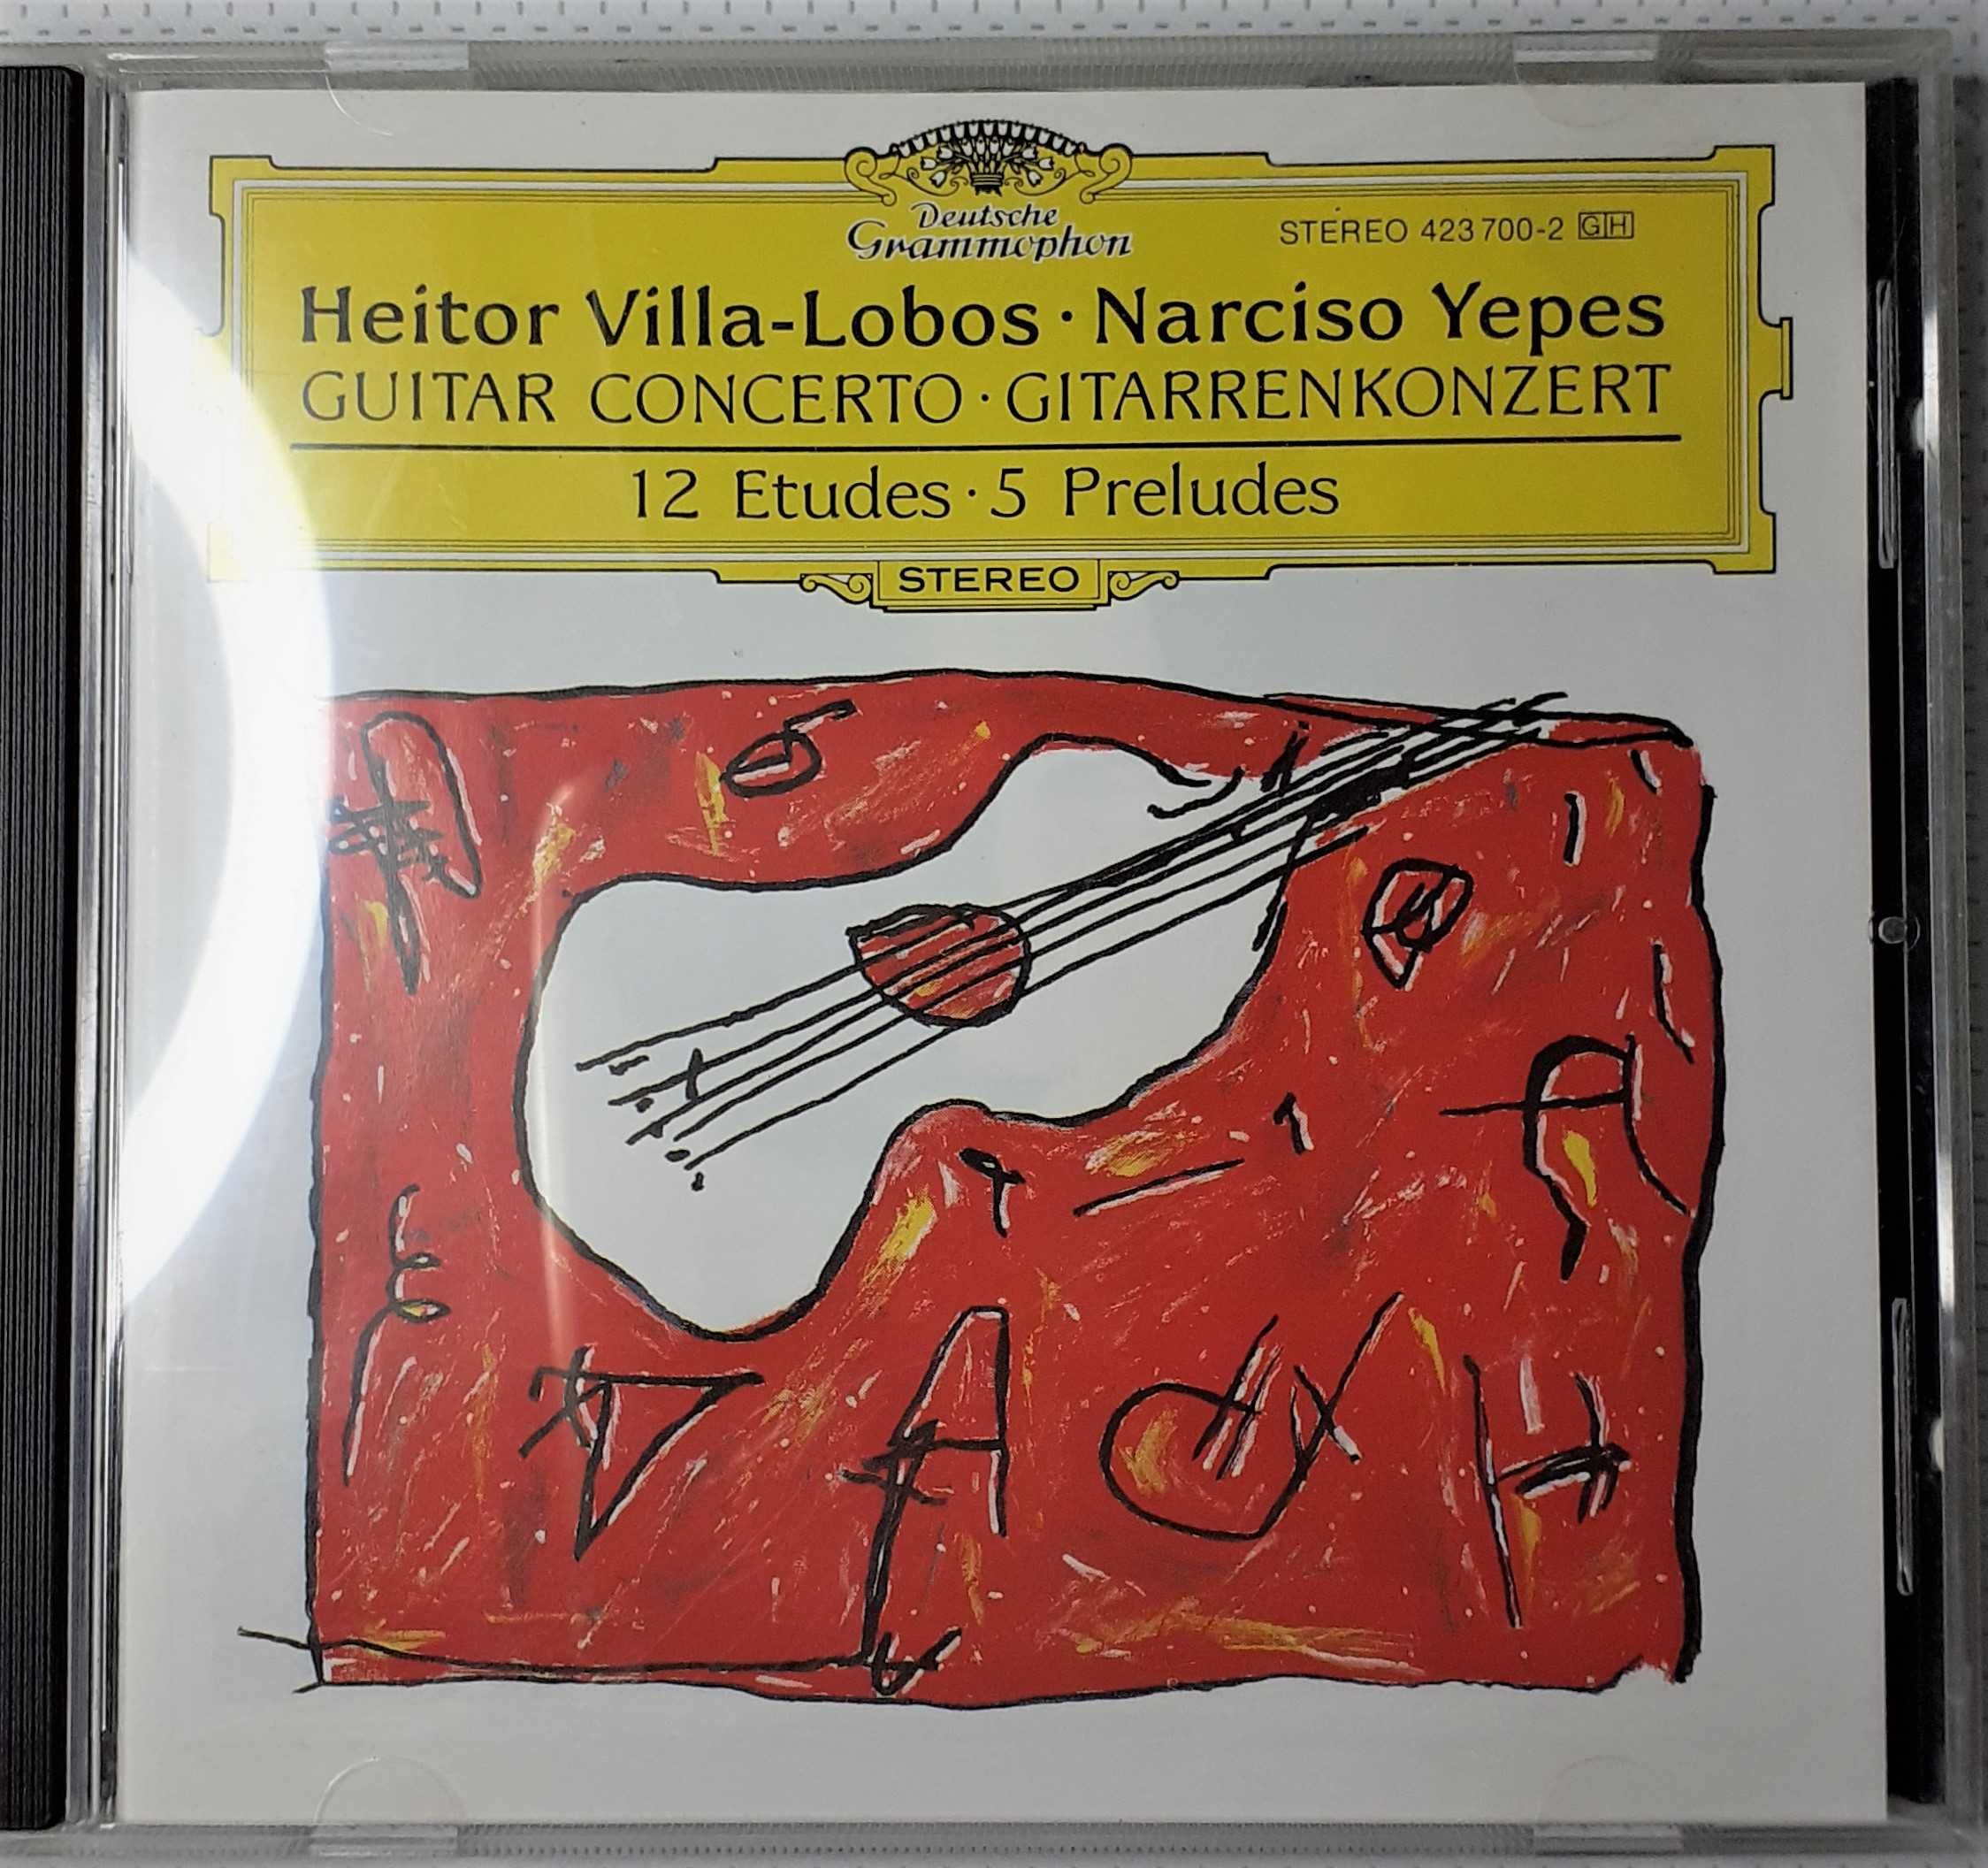 HEITOR VILLA-LOBOS / NARCISO YEPES
Guitar Concerto